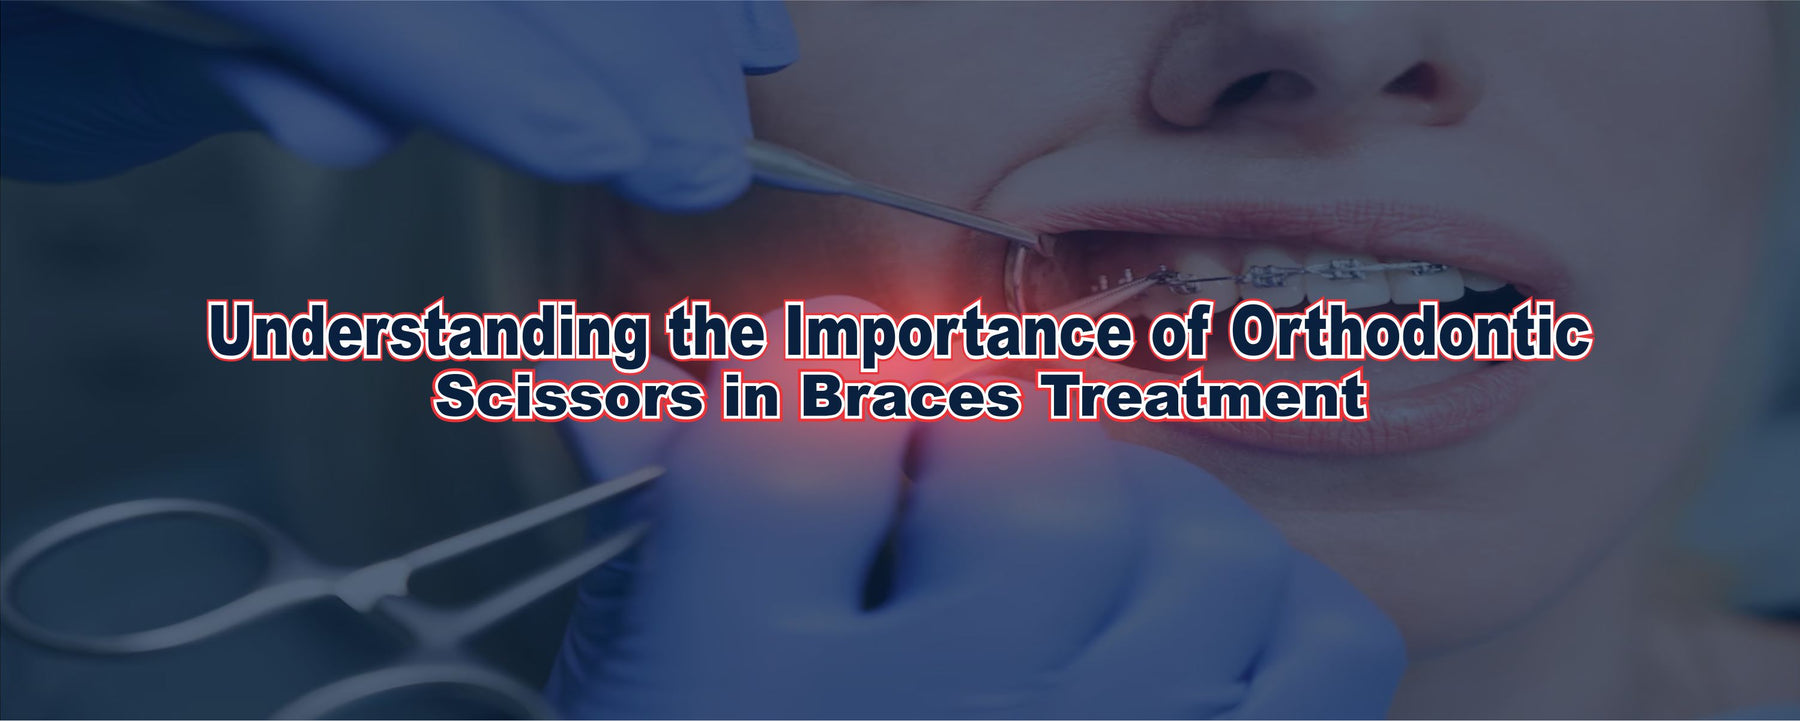 Understanding the Importance of Orthodontic Scissors in Braces Treatment